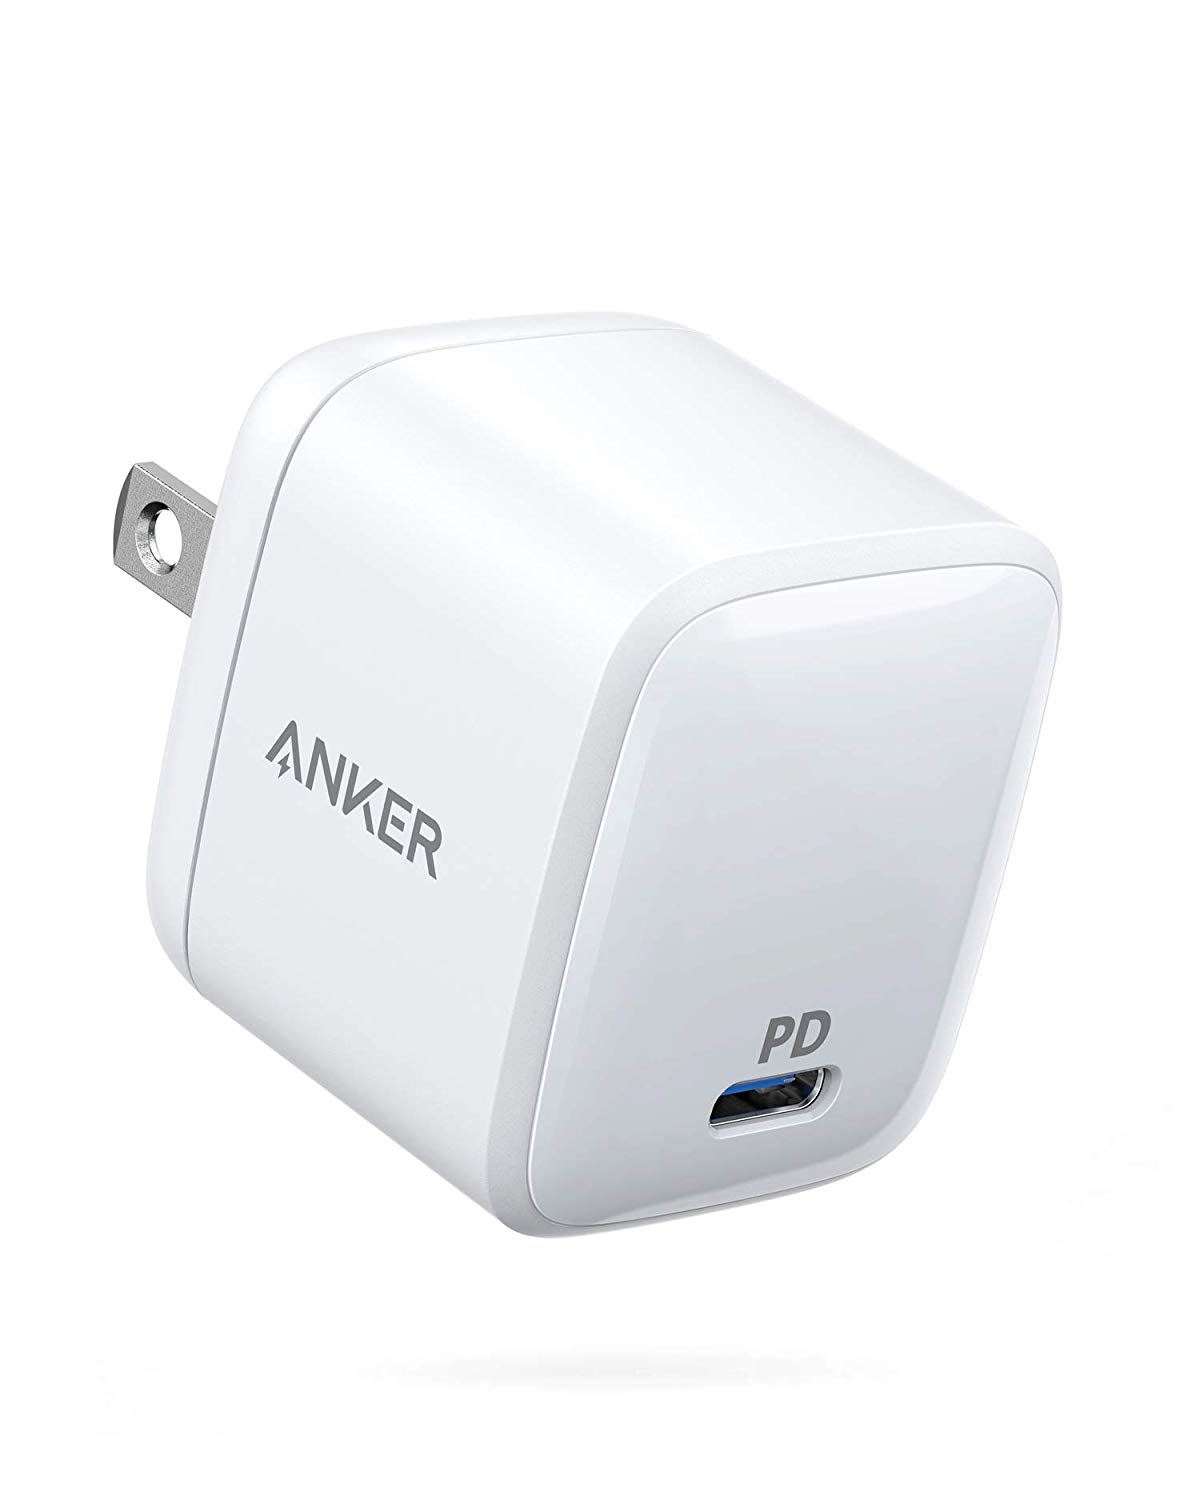 Anker、窒化ガリウムを採用した超コンパクトなUSB急速充電器｢Anker PowerPort Atom PD 1｣を発売